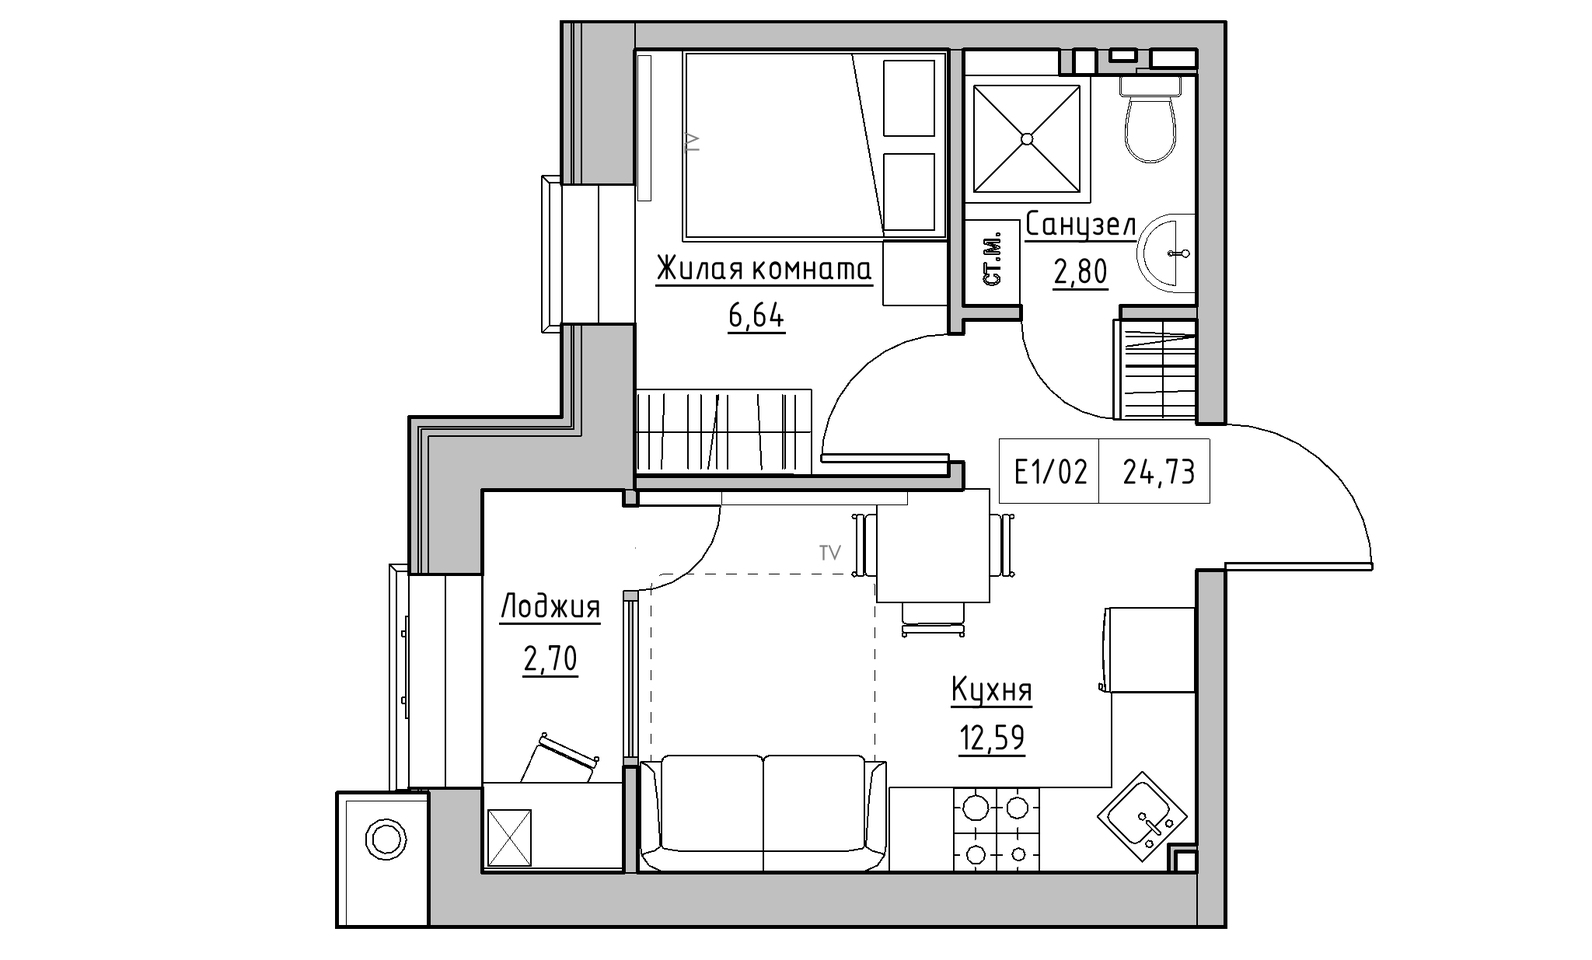 Planning 1-rm flats area 24.73m2, KS-014-03/0013.